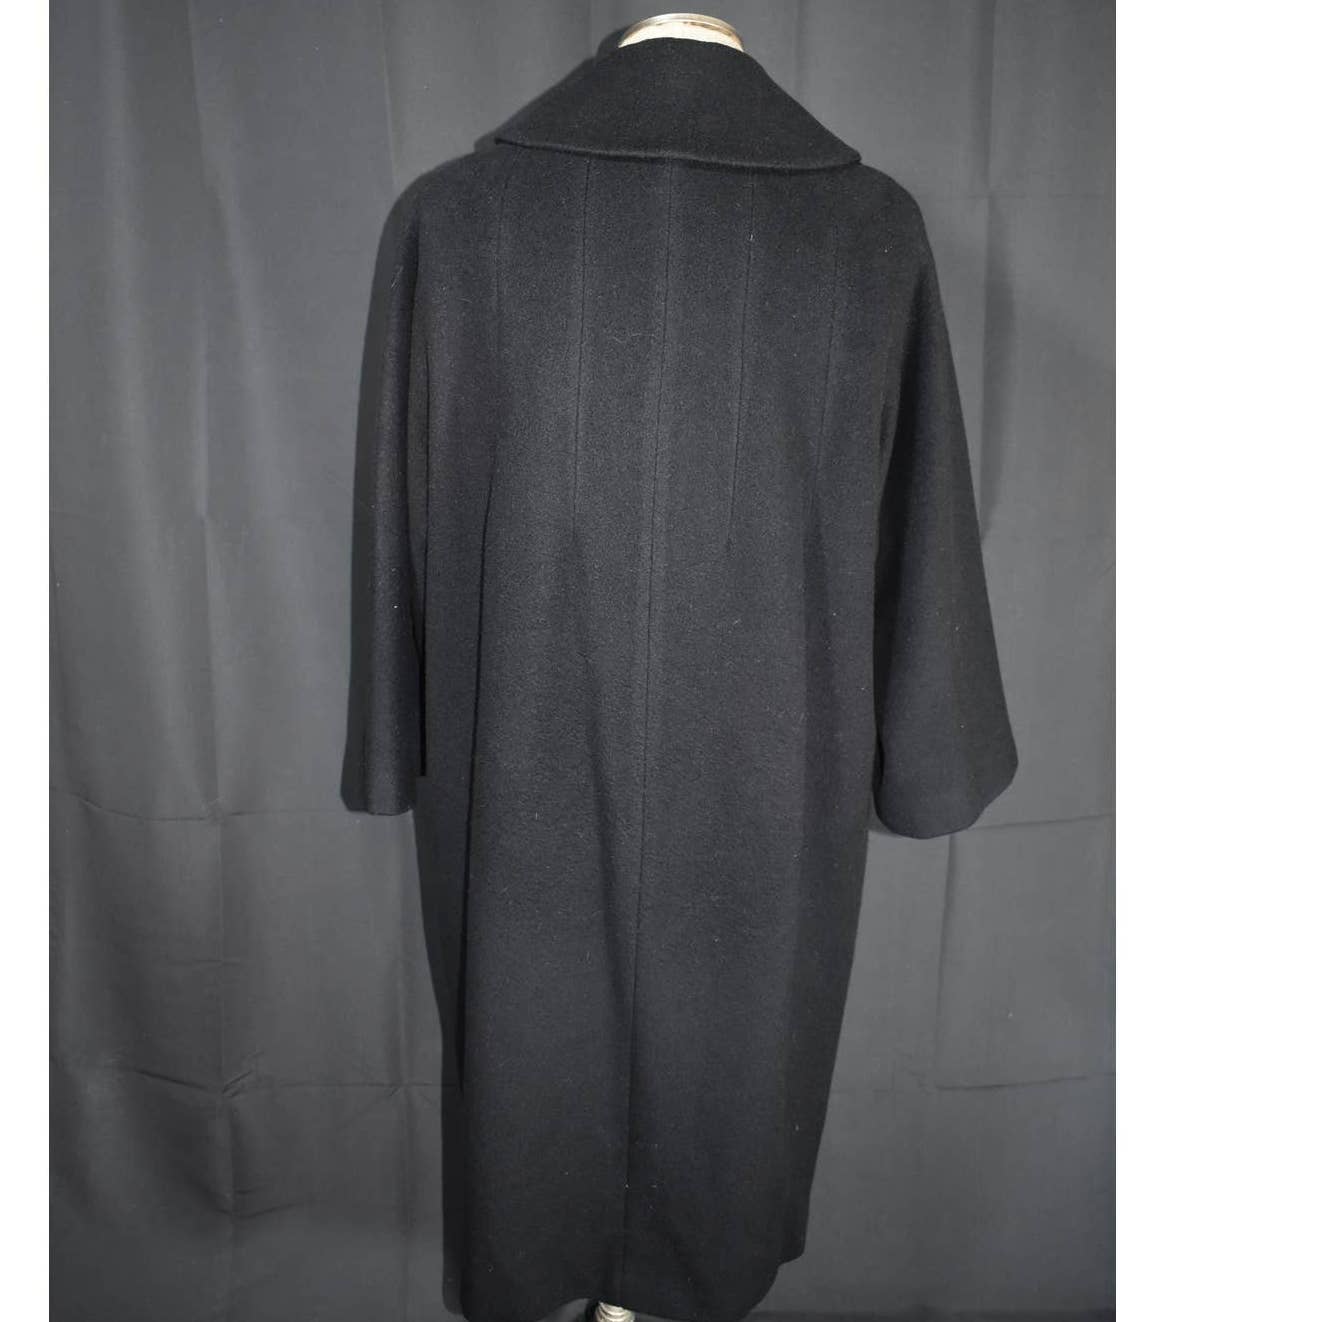 Vintage 1950's Capwell's 100% Cashmere Black Overcoat - L